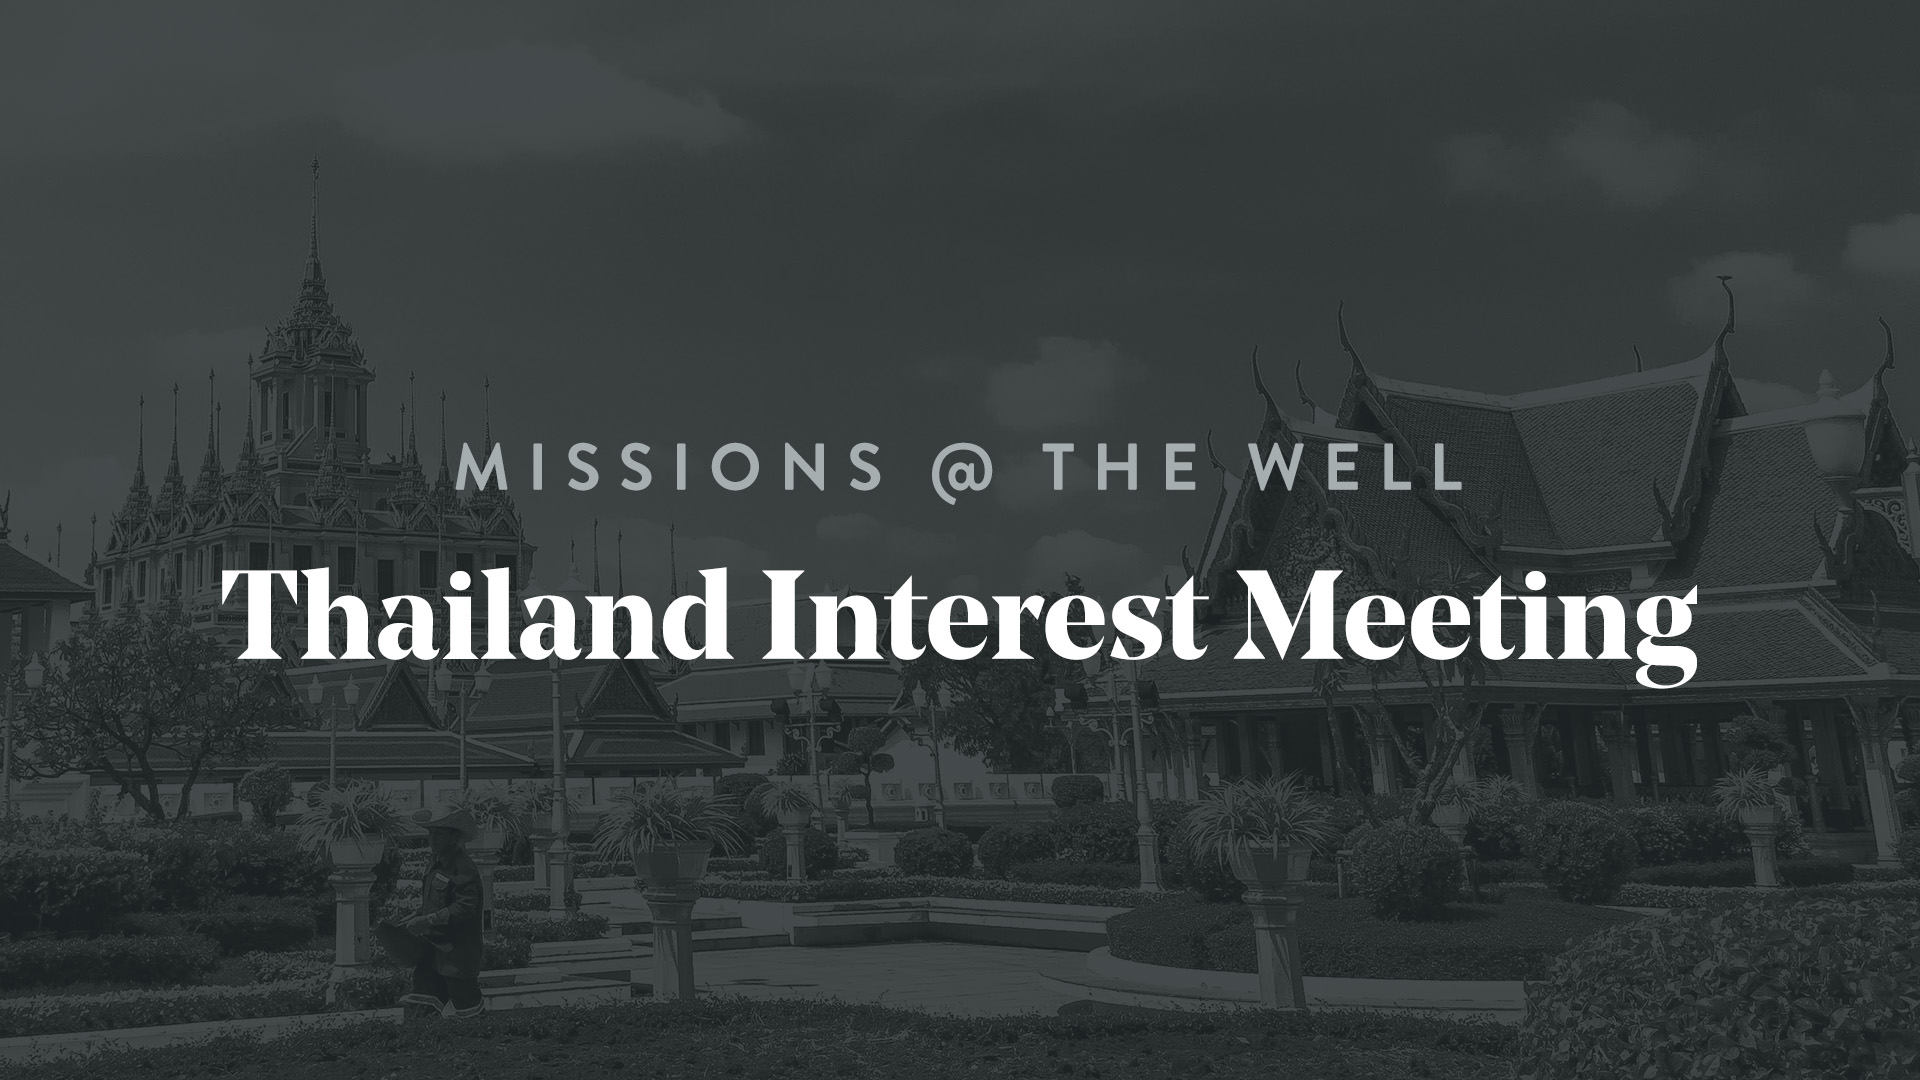 Thailand interest meeting image